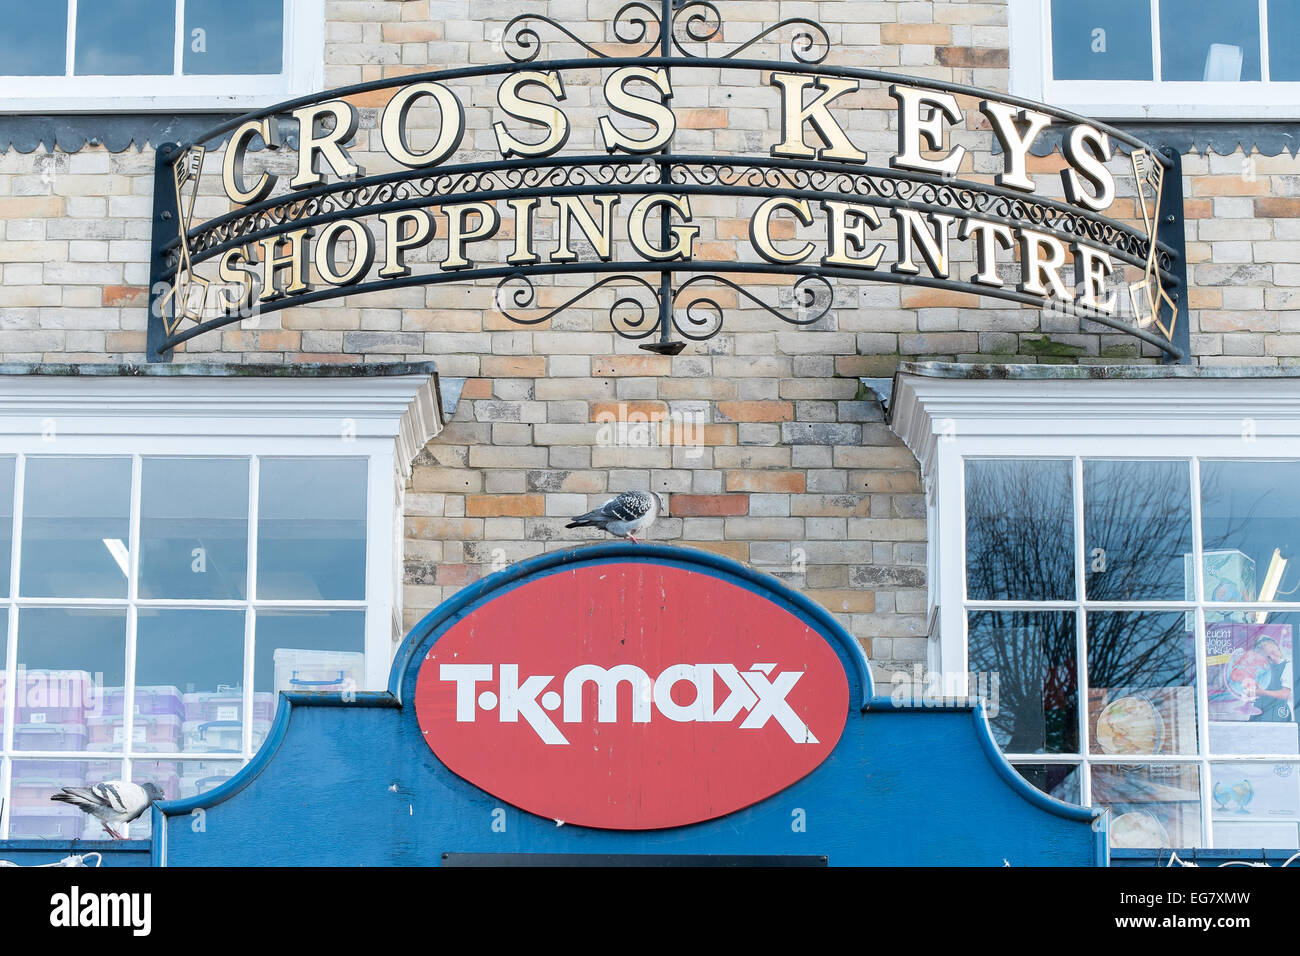 Cross Keys Shopping centre in salisbury Stock Photo